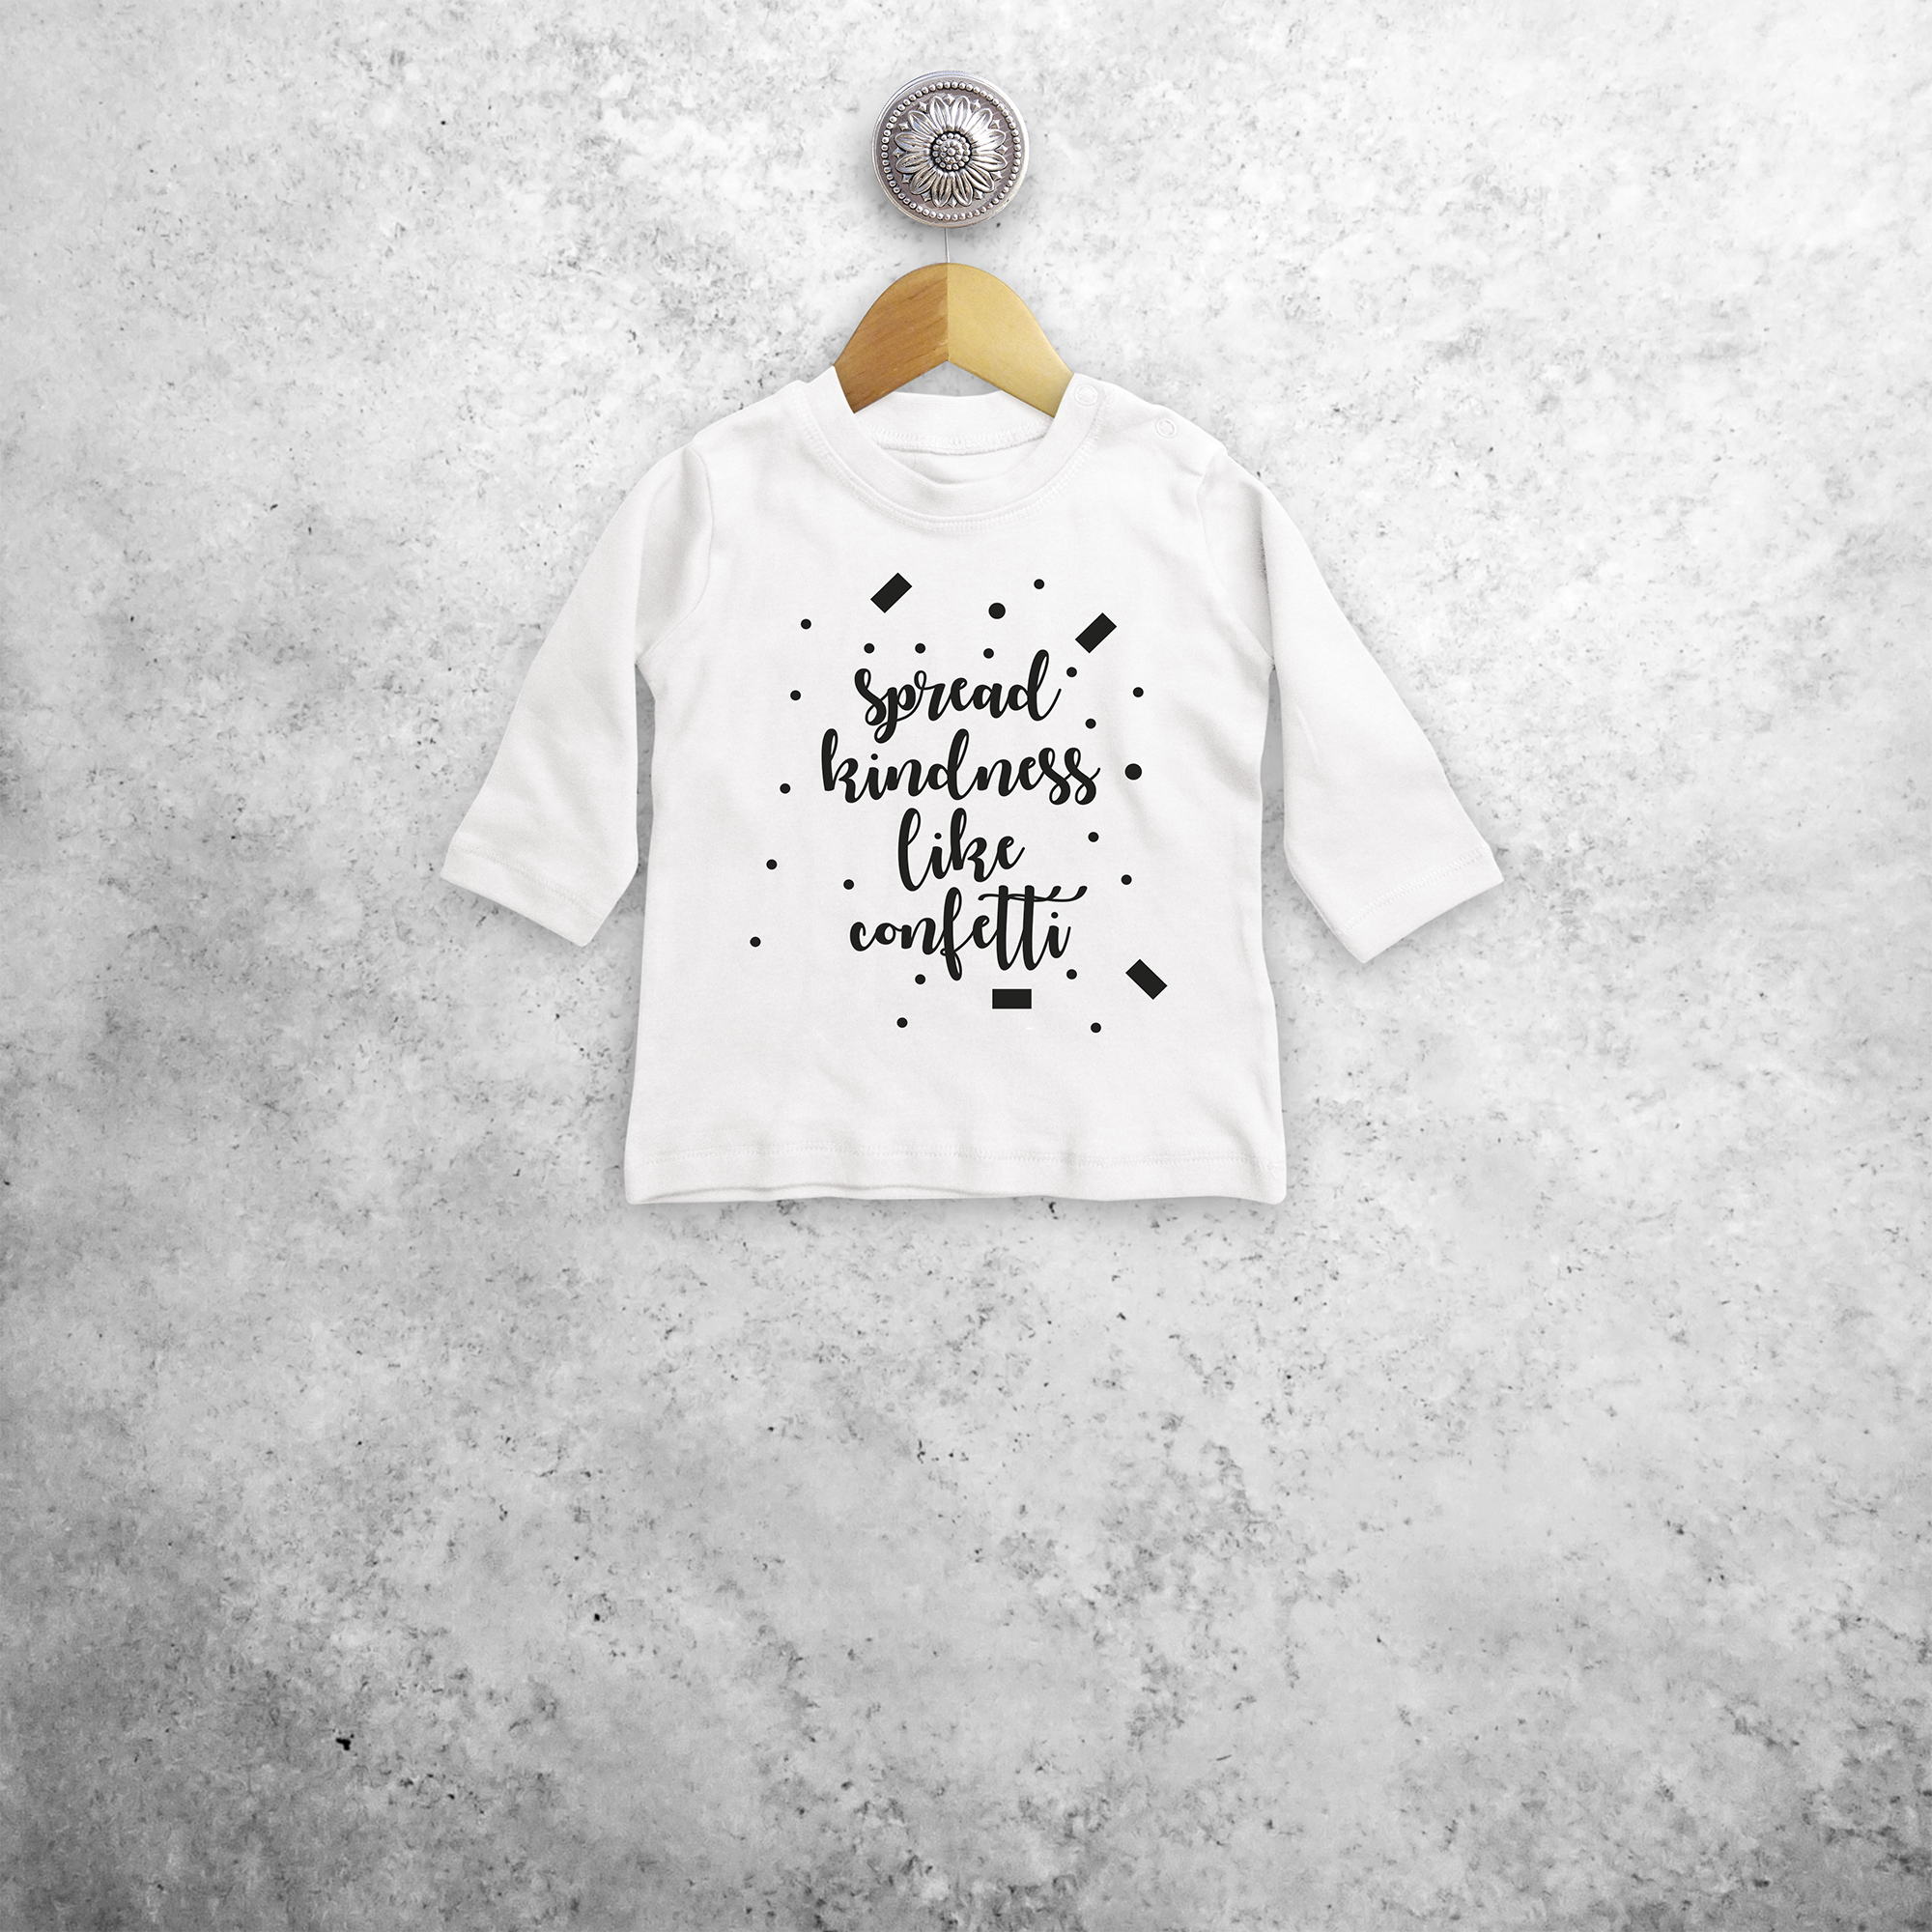 'Spread kindness like confetti' baby longsleeve shirt